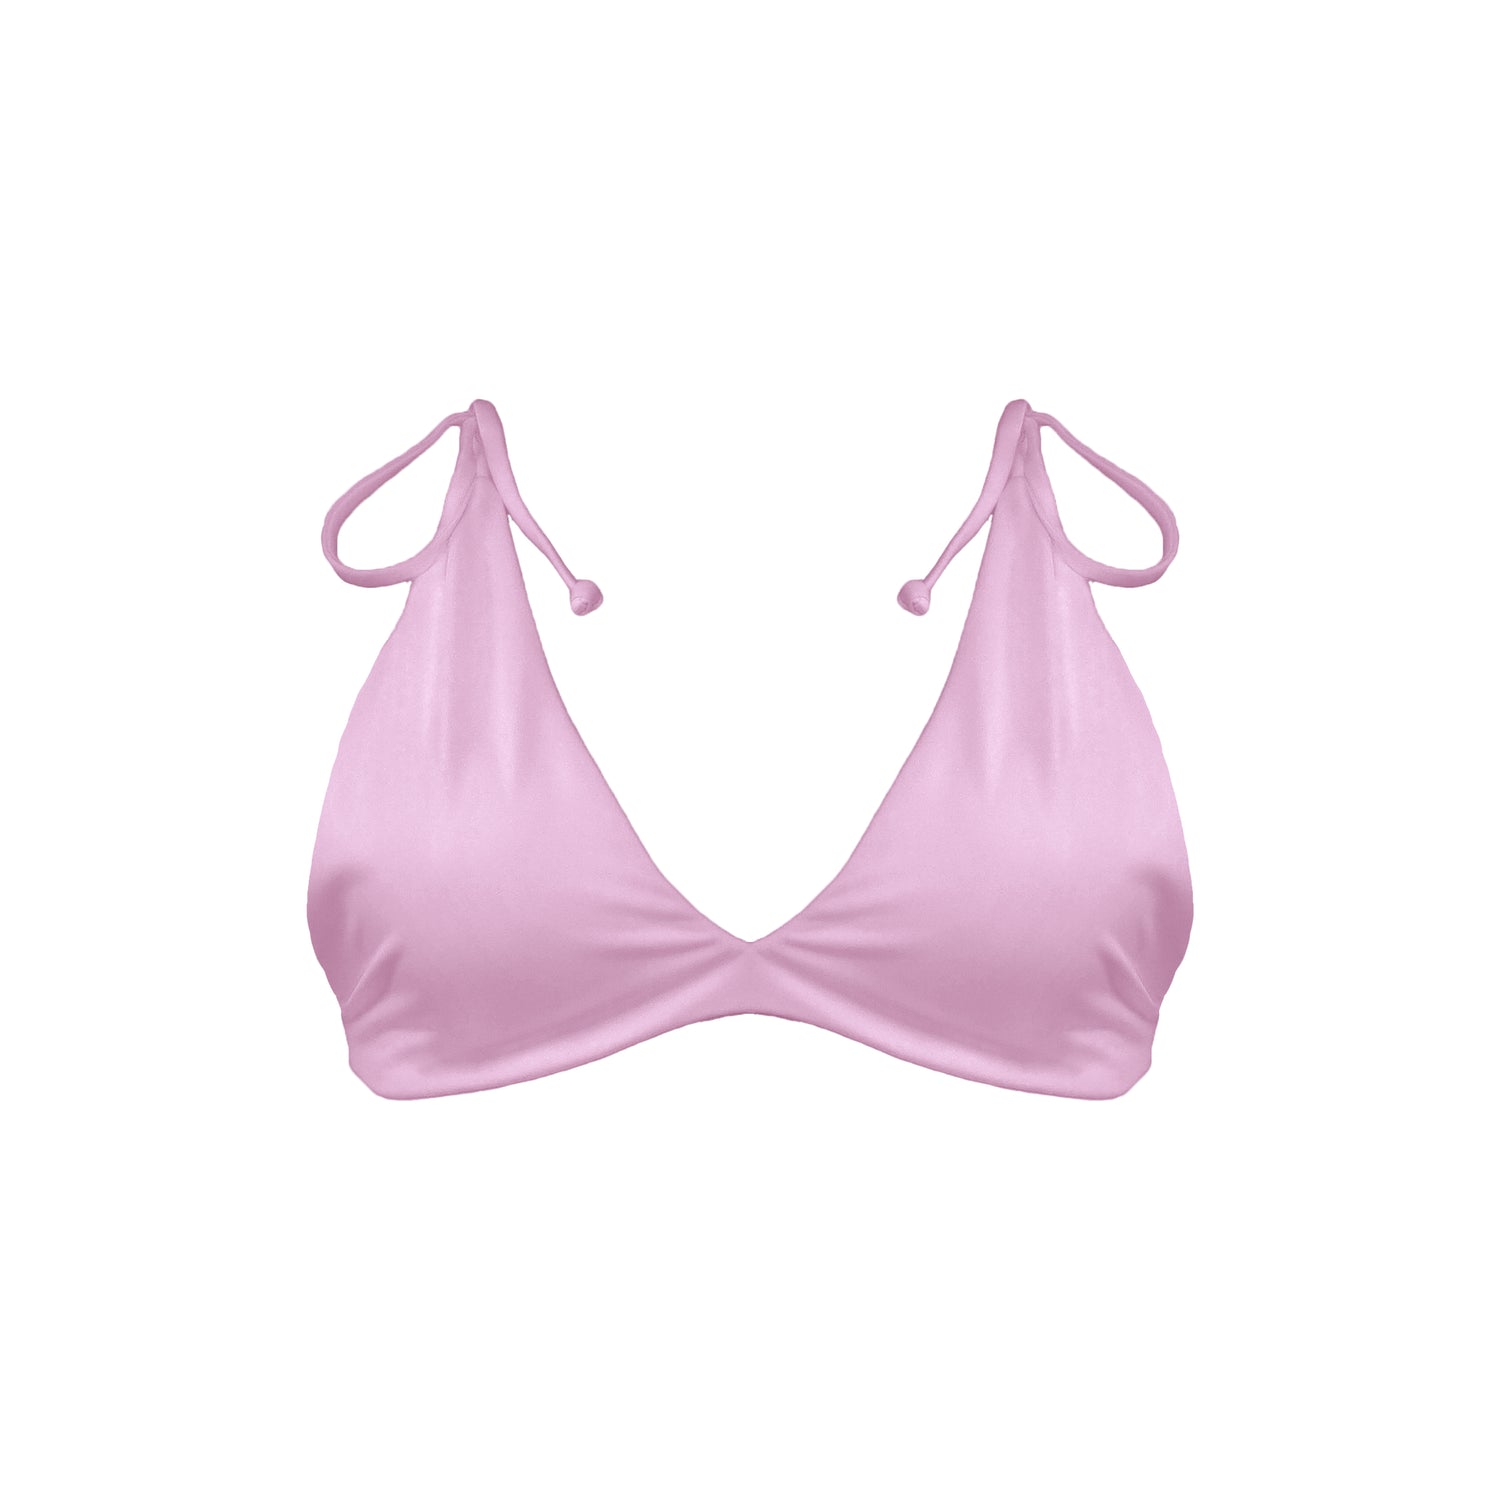 Pastel pink Capri bralette style bikini top with adjustable tie shoulder straps.